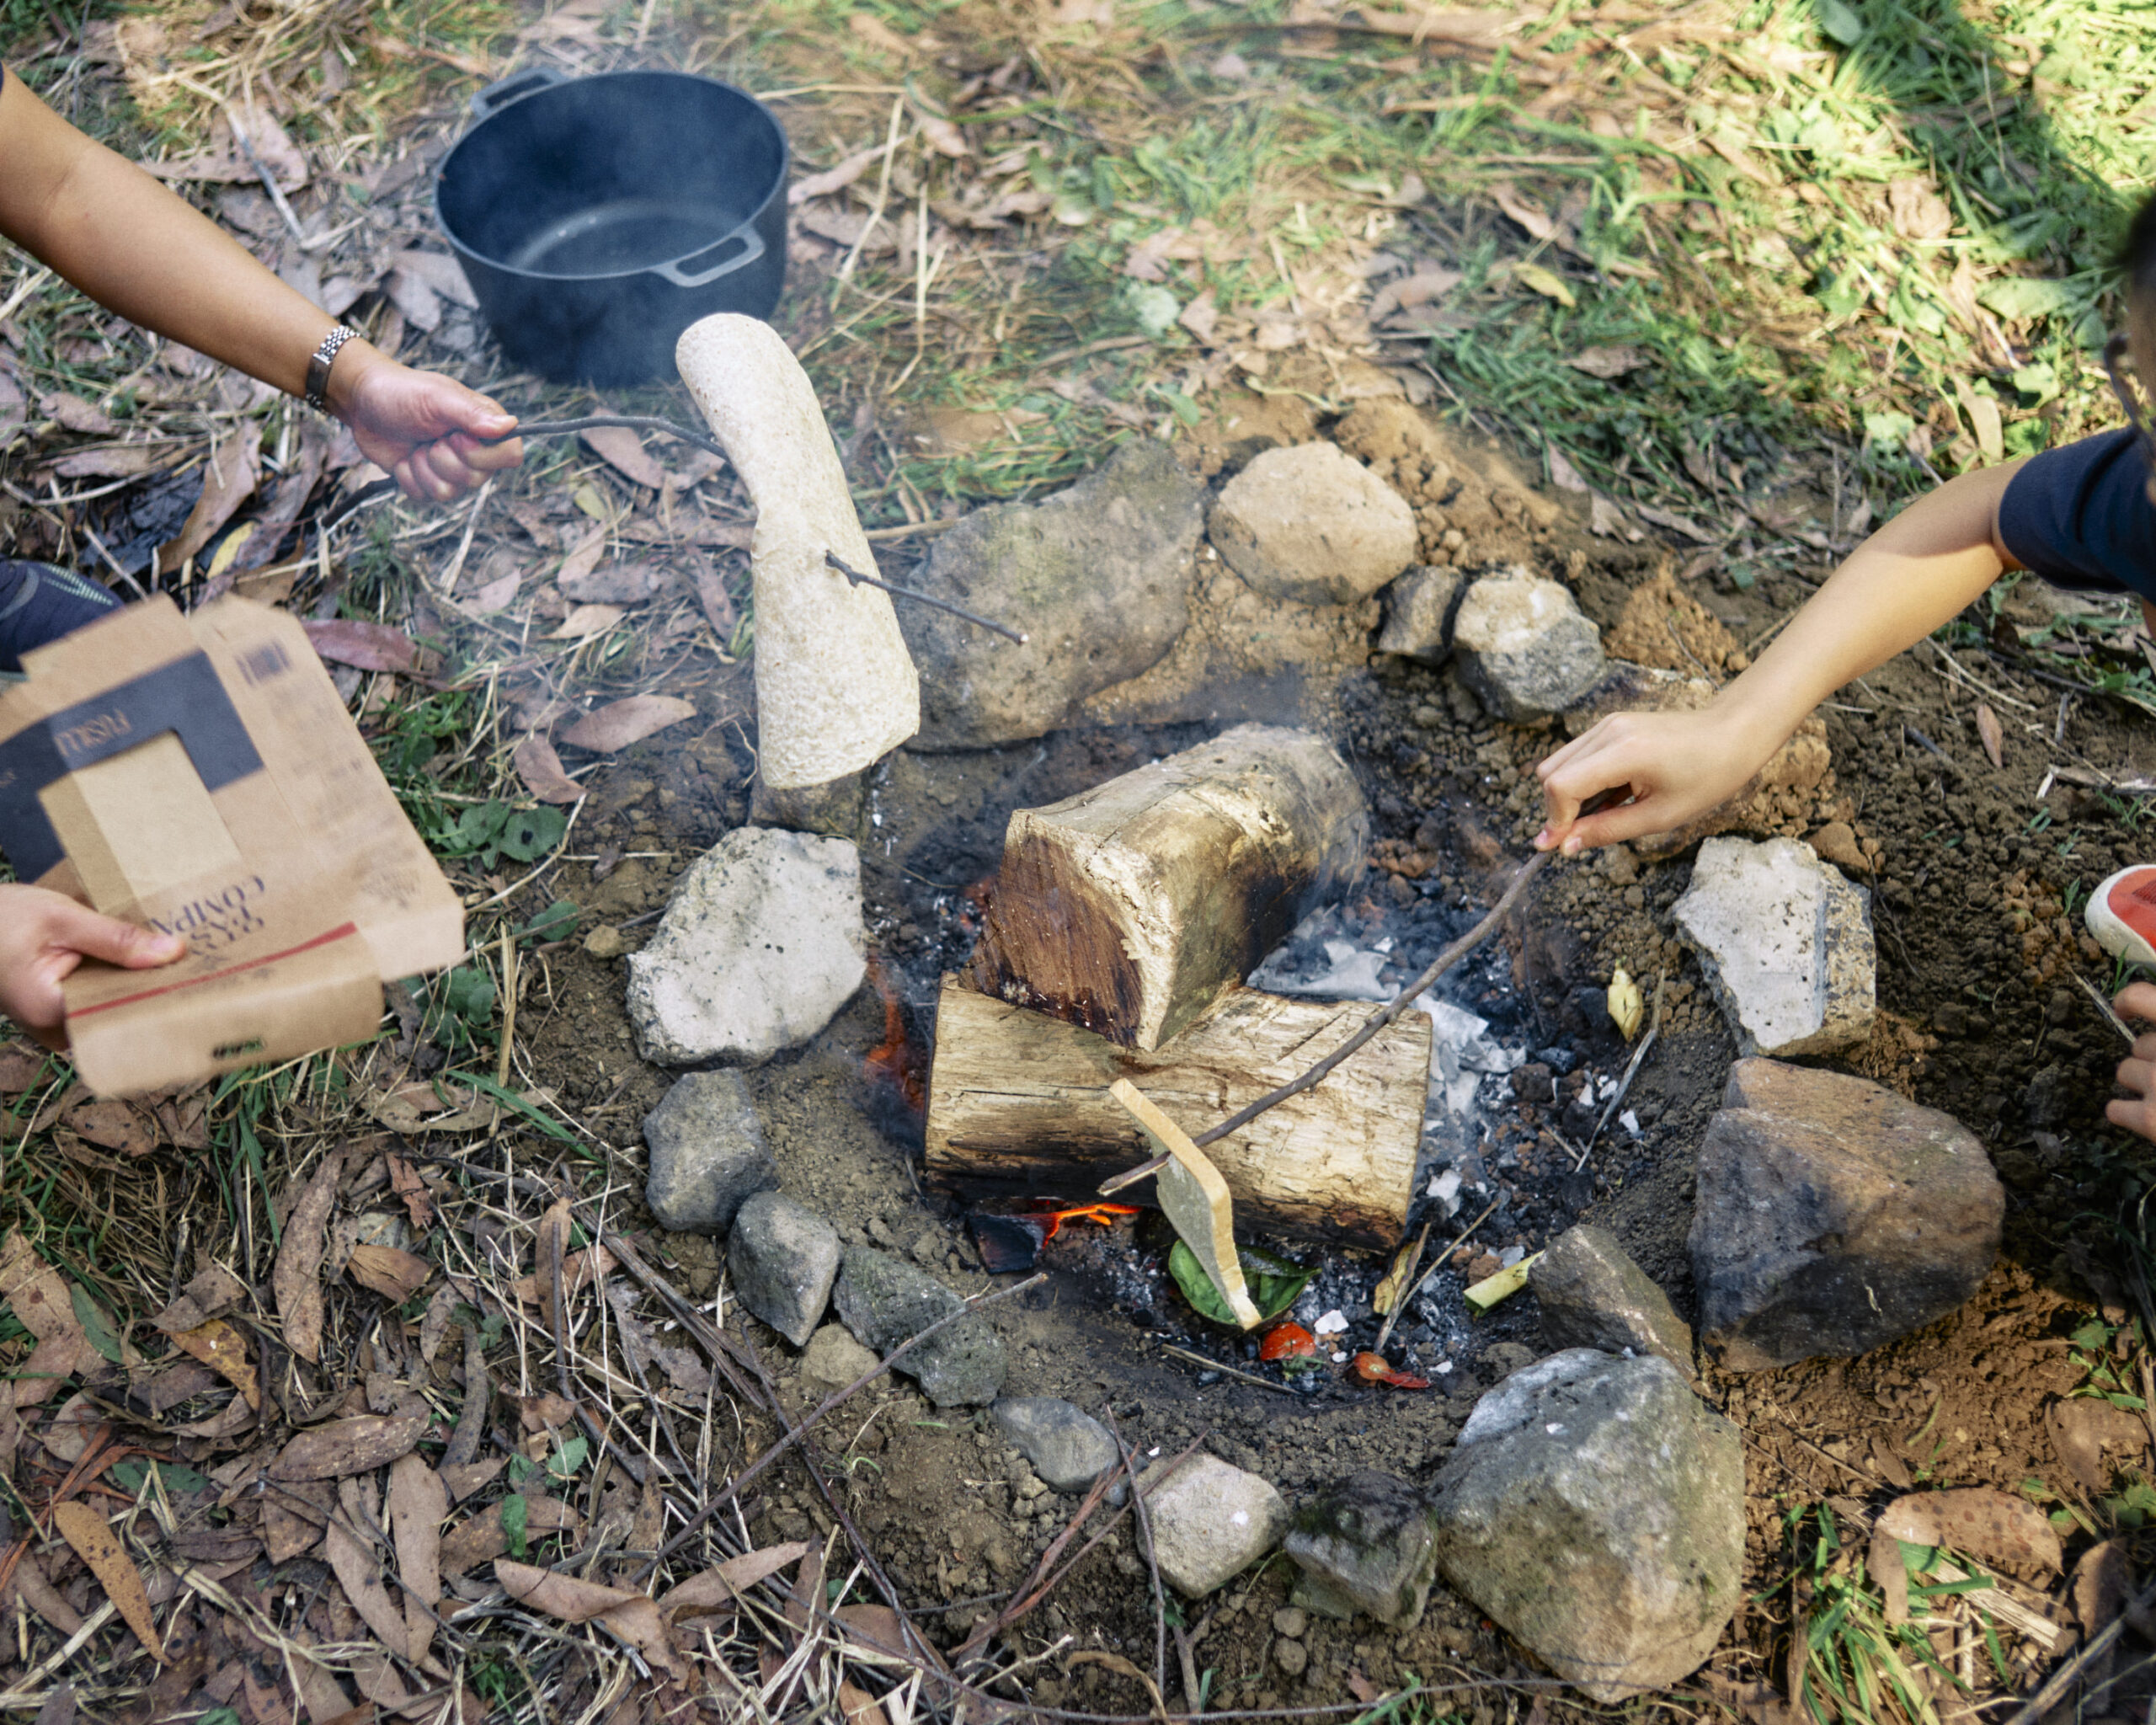 Stevensons Fall camping leica mp240 toast bread